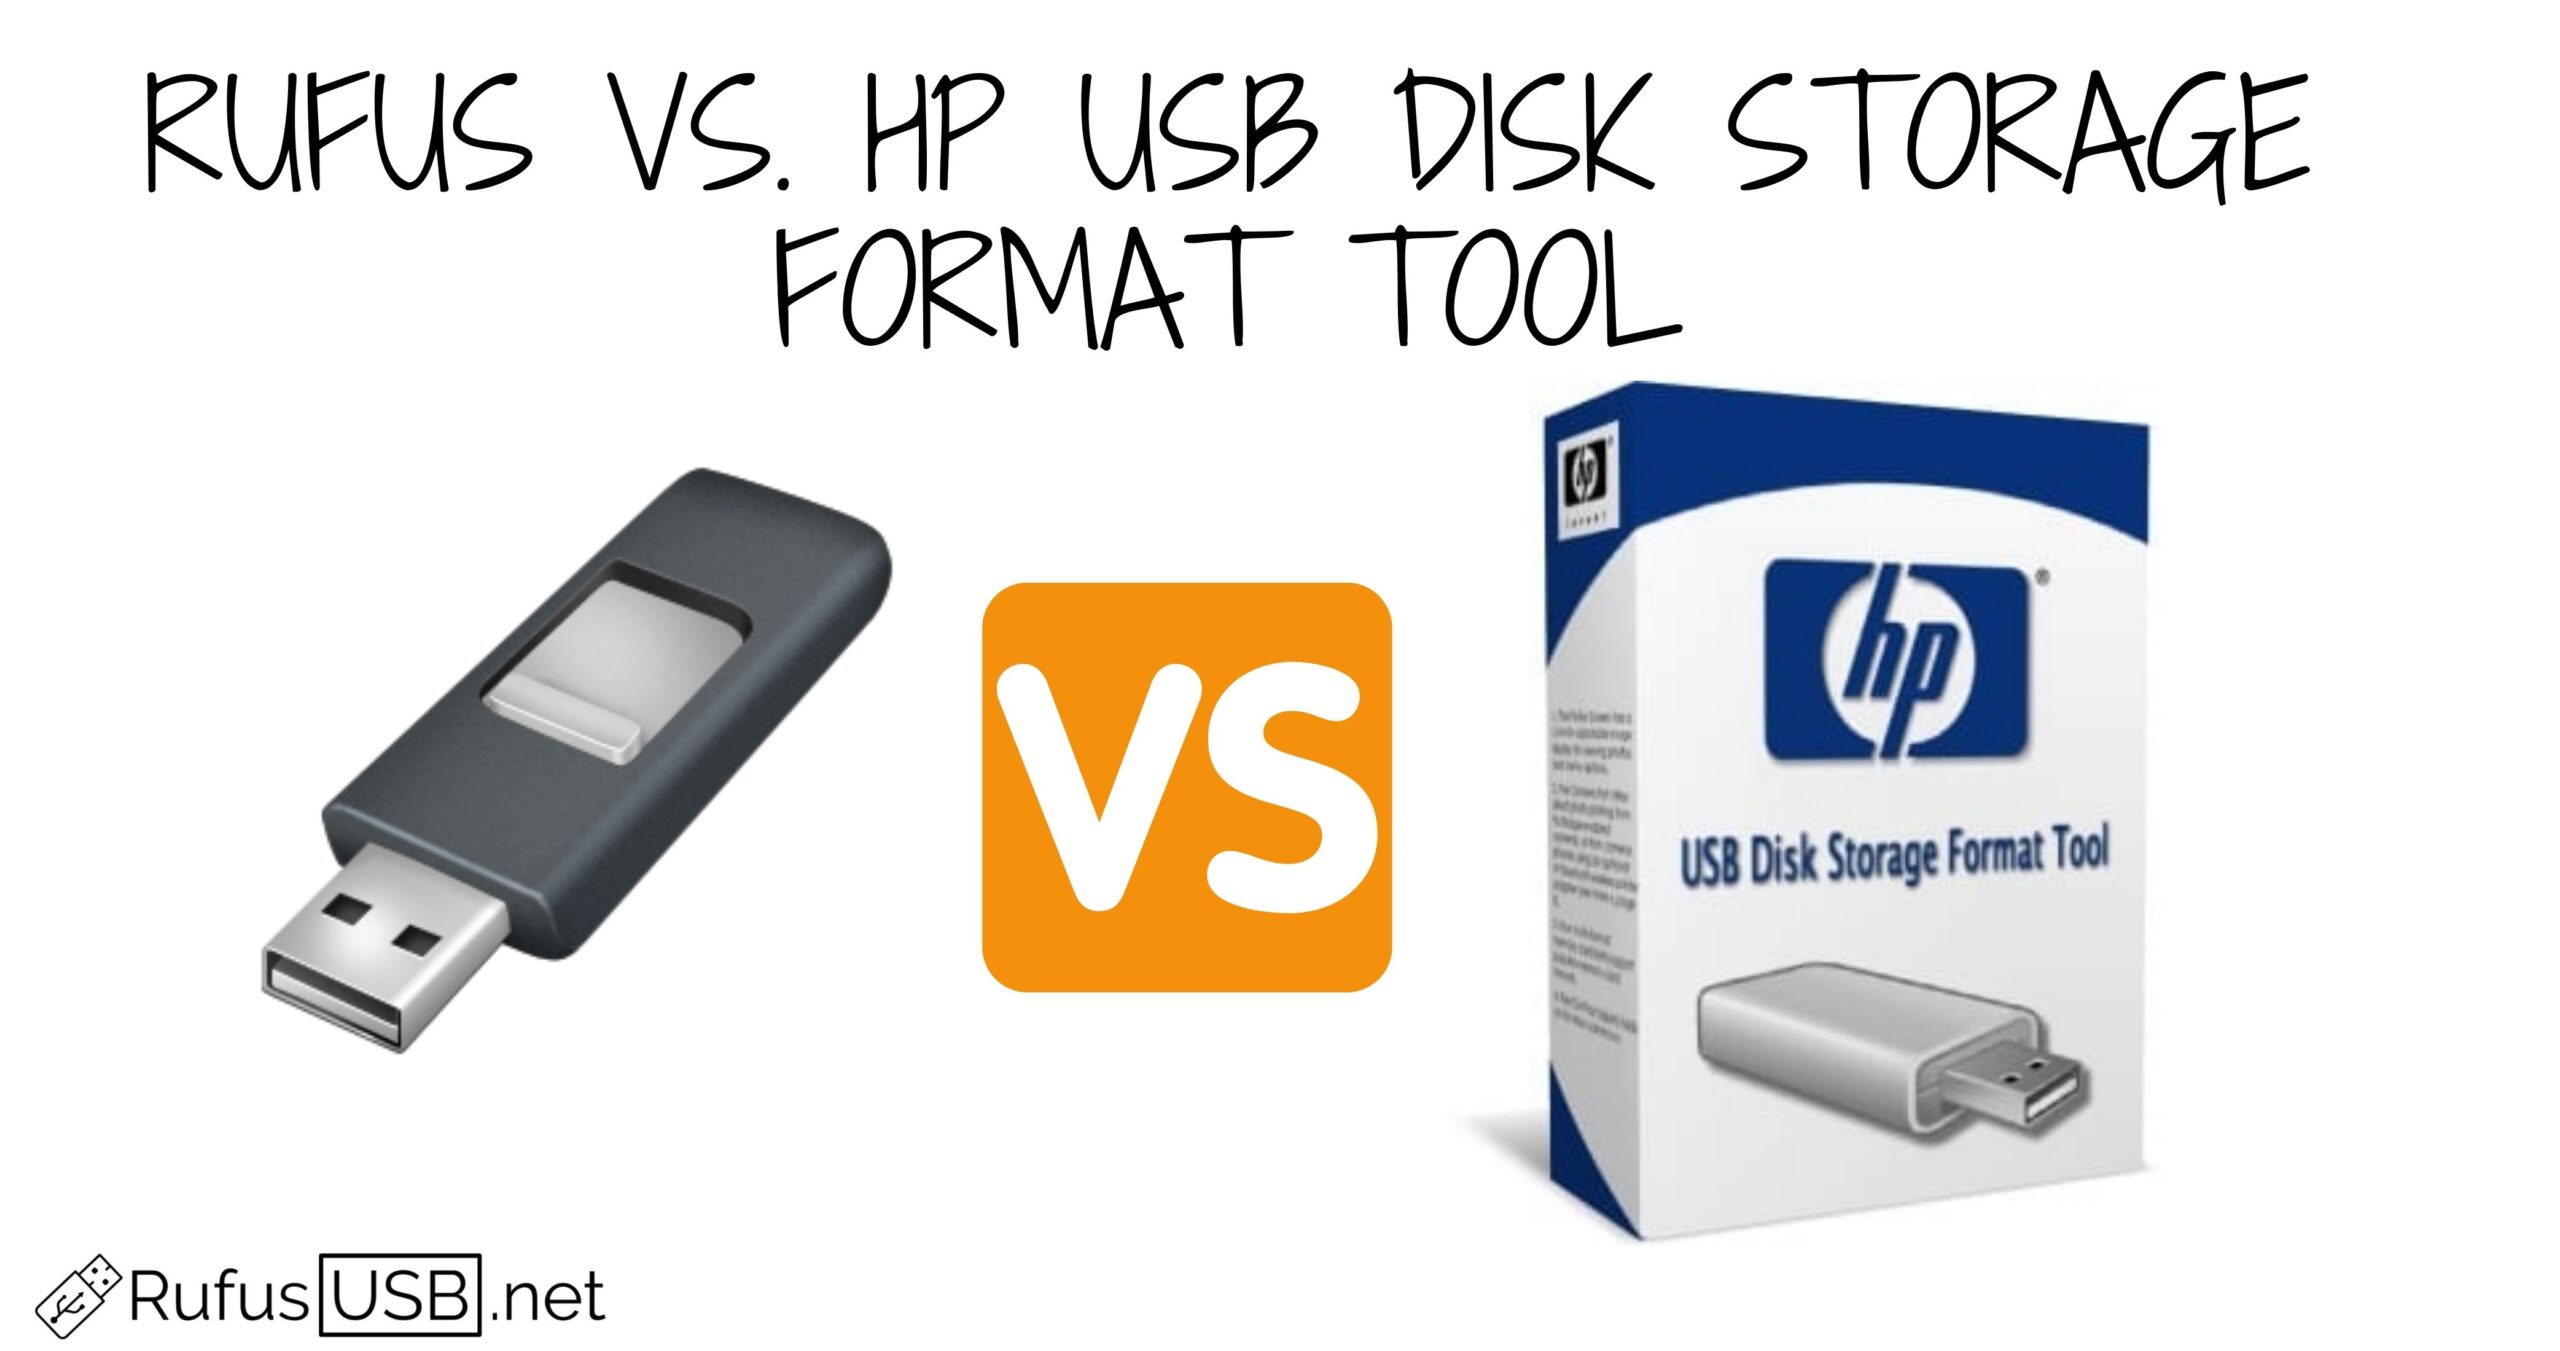 Rufus vs. HP USB Disk Storage Format Tool